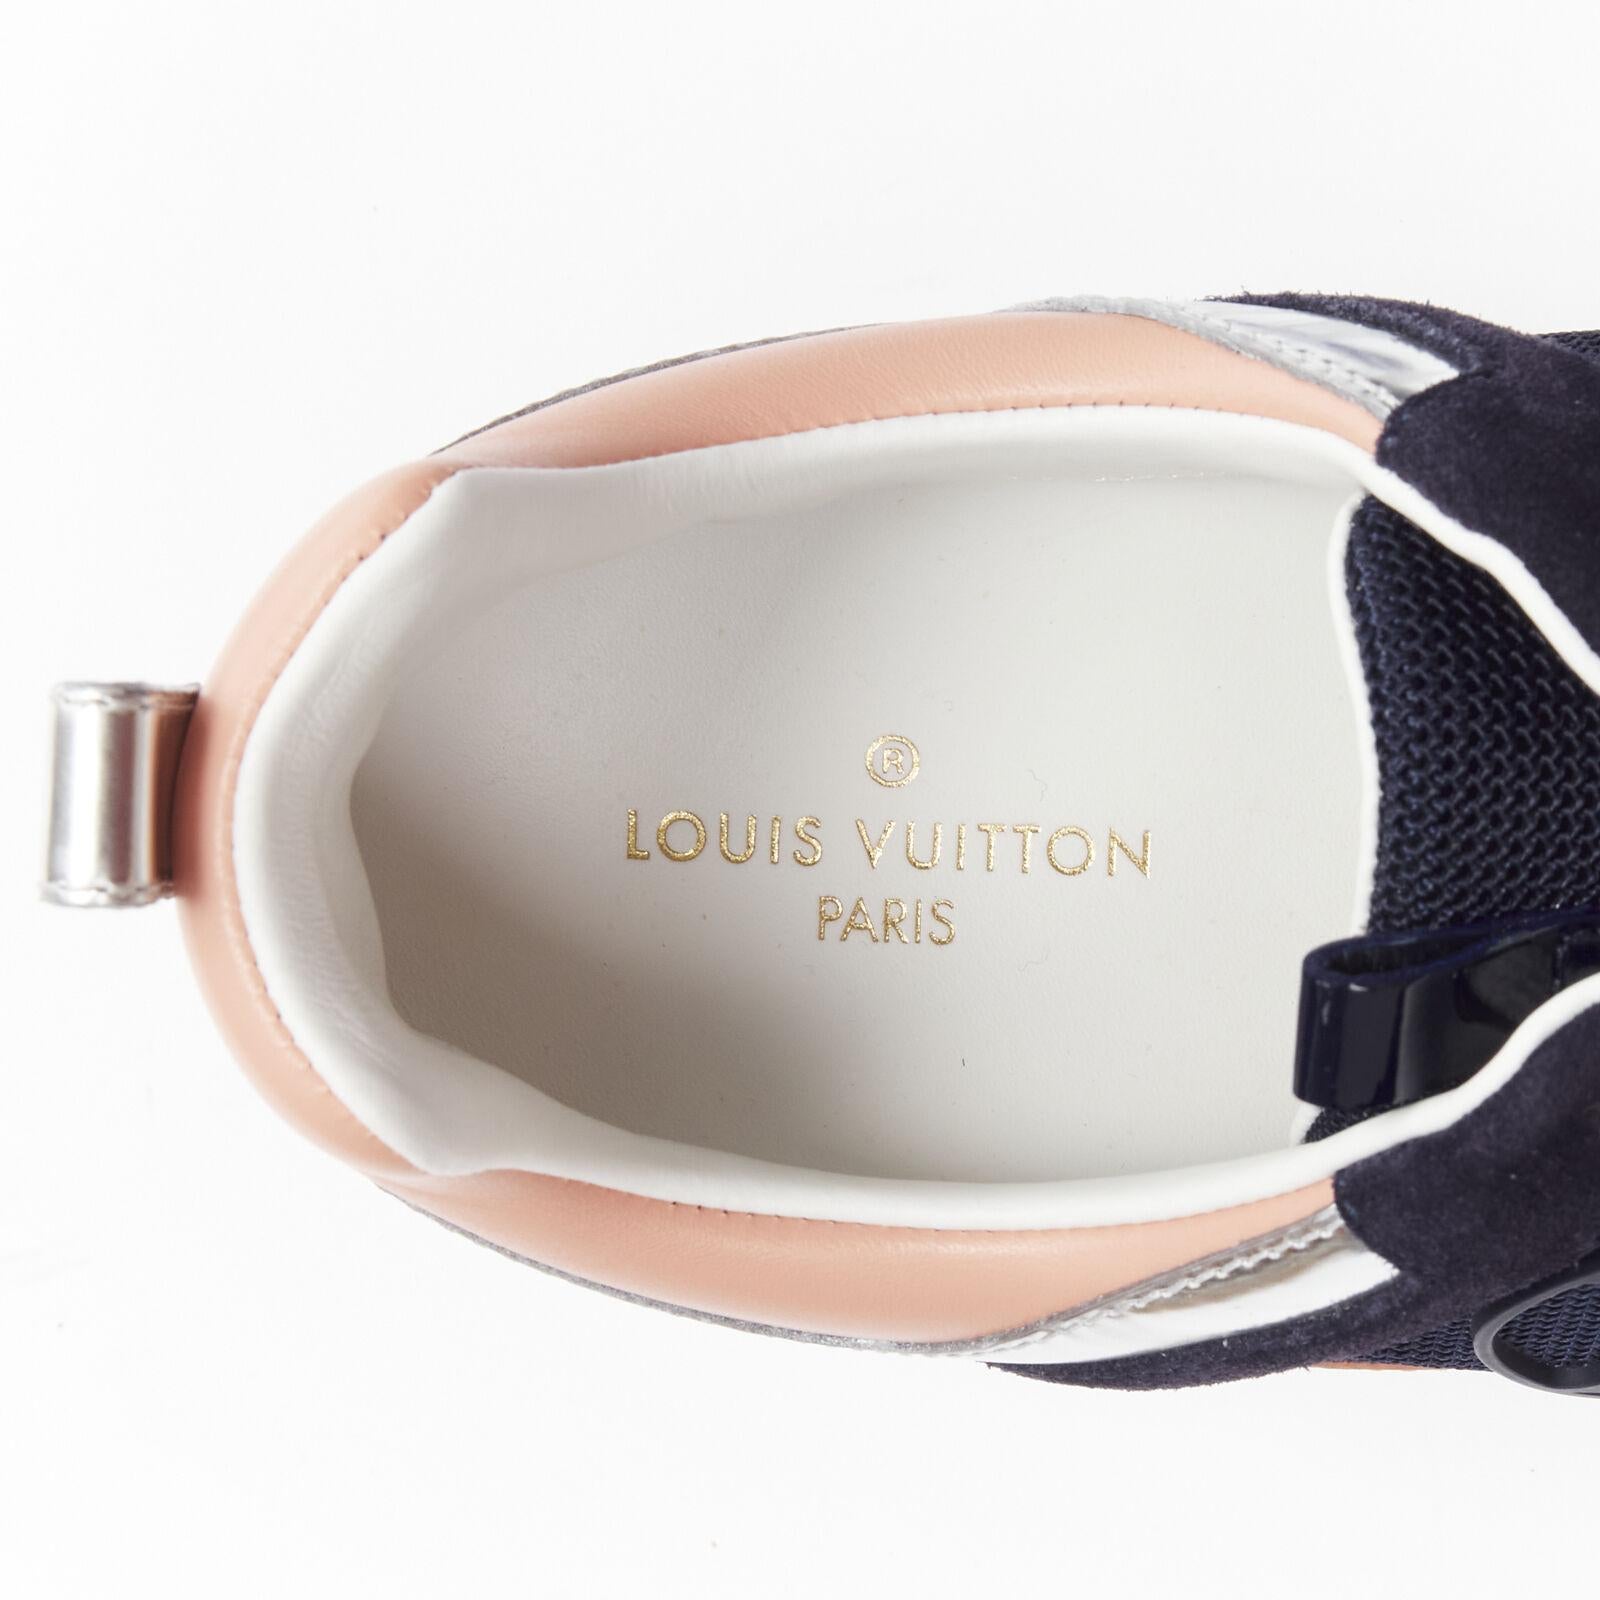 LOUIS VUITTON Run Away pink navy silver LV logo low top sneakers EU38 US8 2